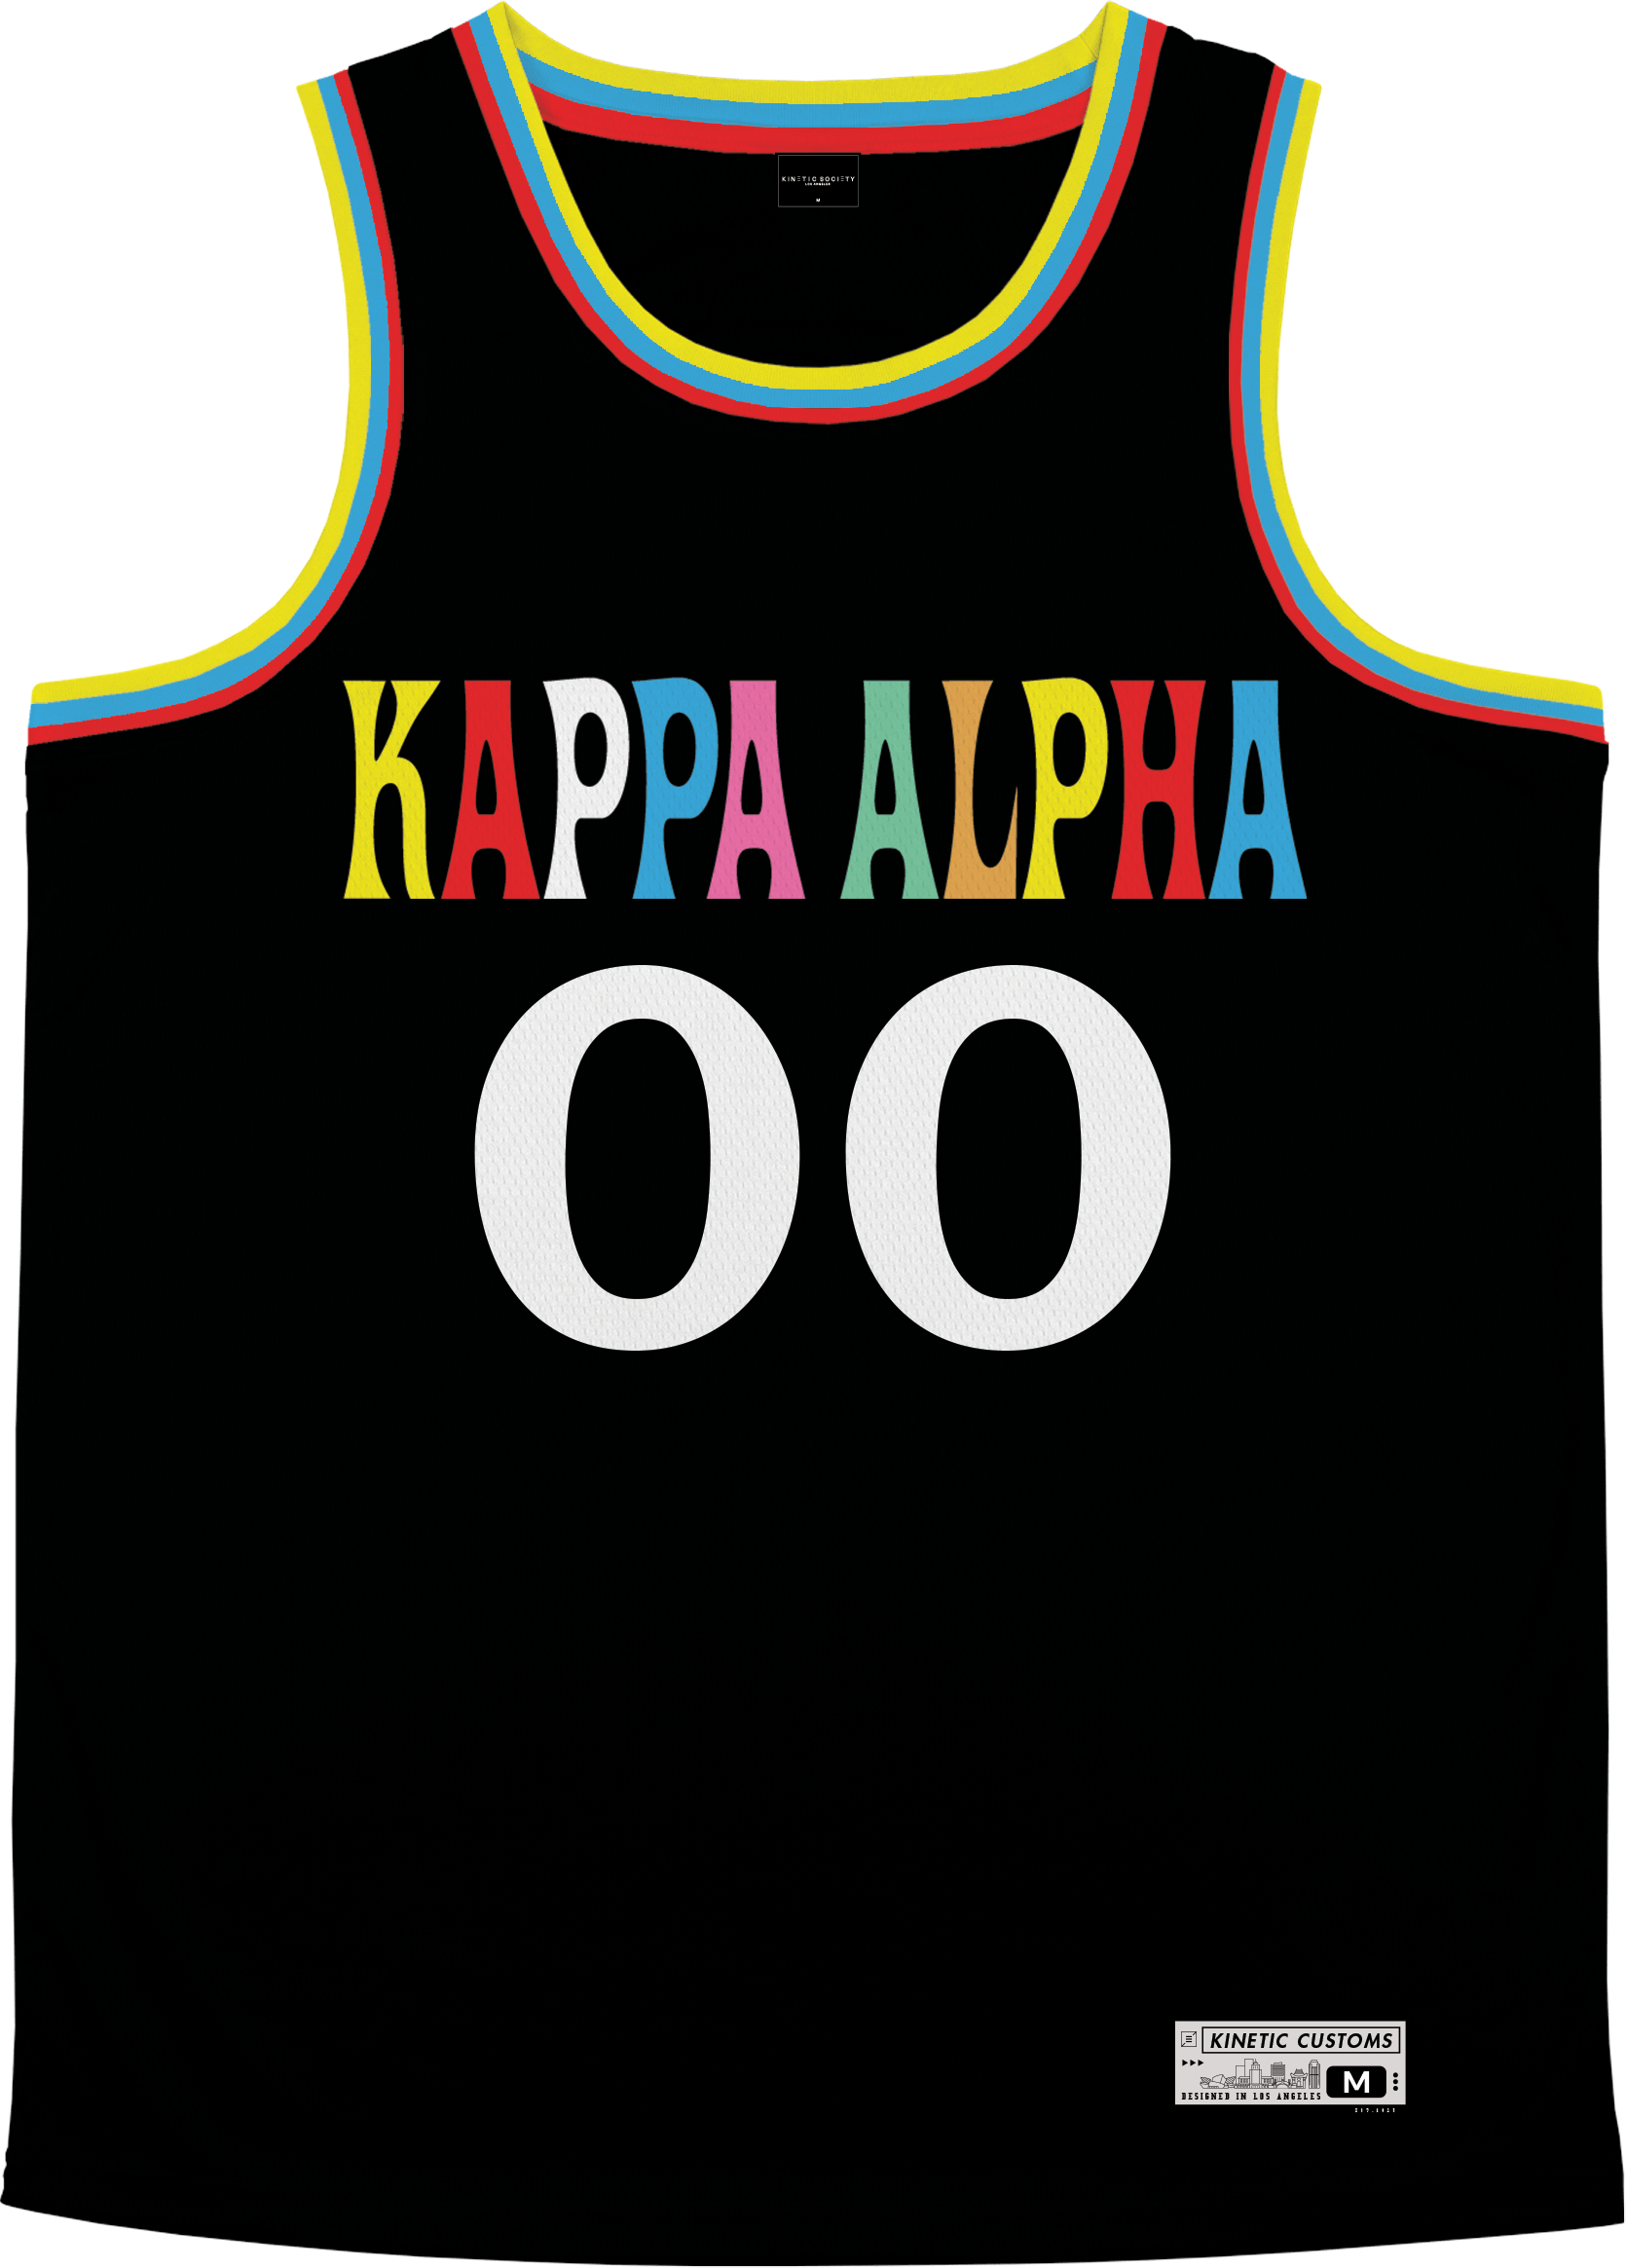 Kappa Alpha Order - Crayon House Basketball Jersey - Kinetic Society